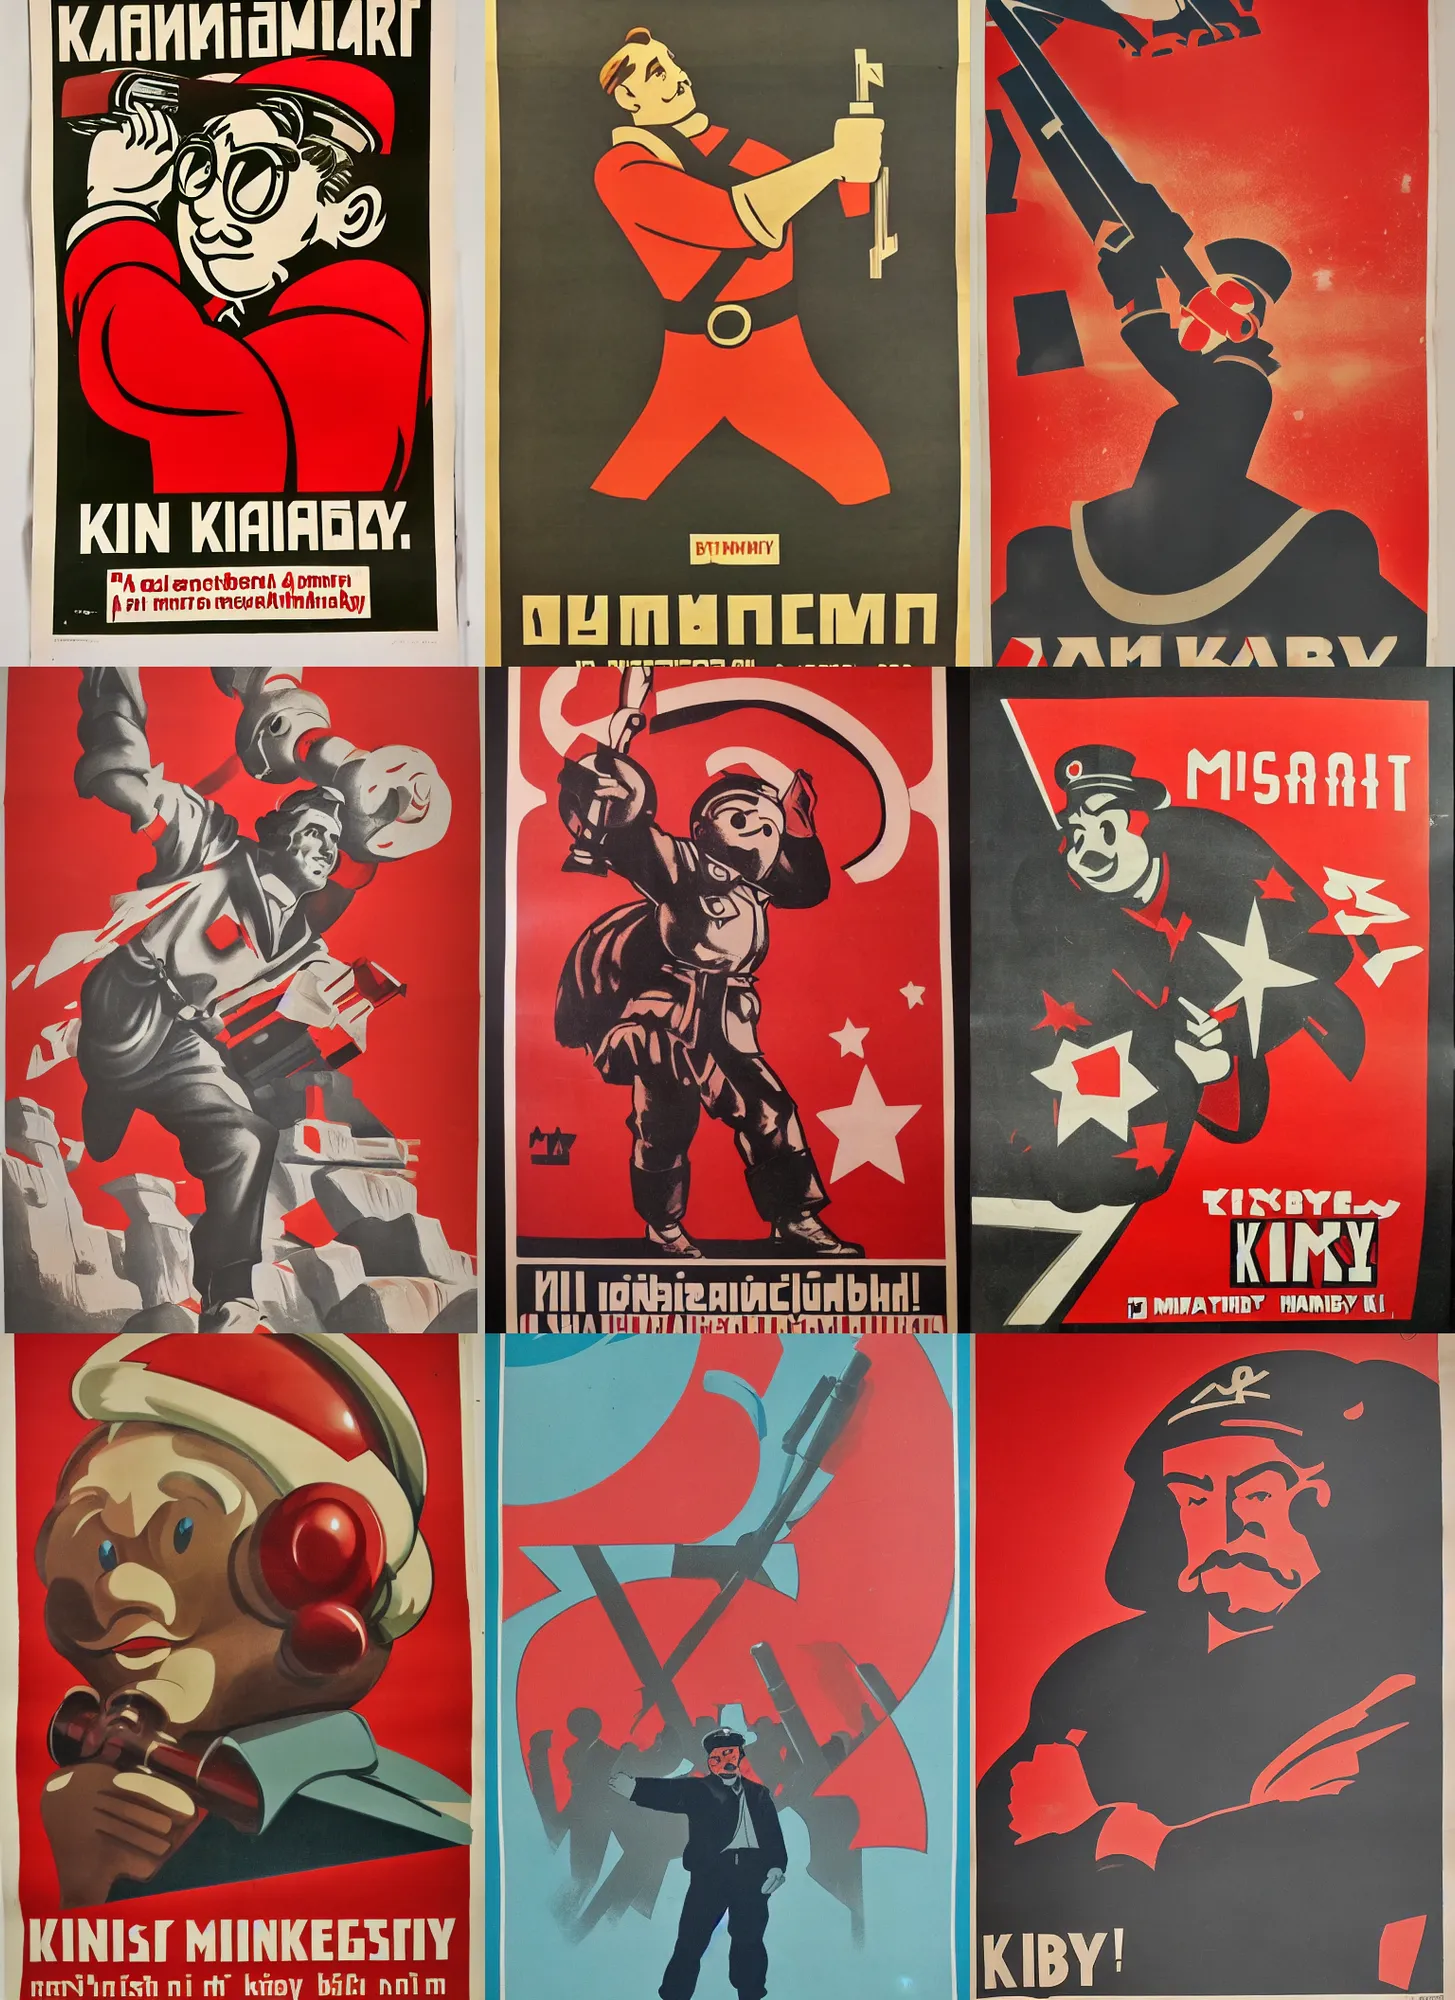 communism cartoon propaganda